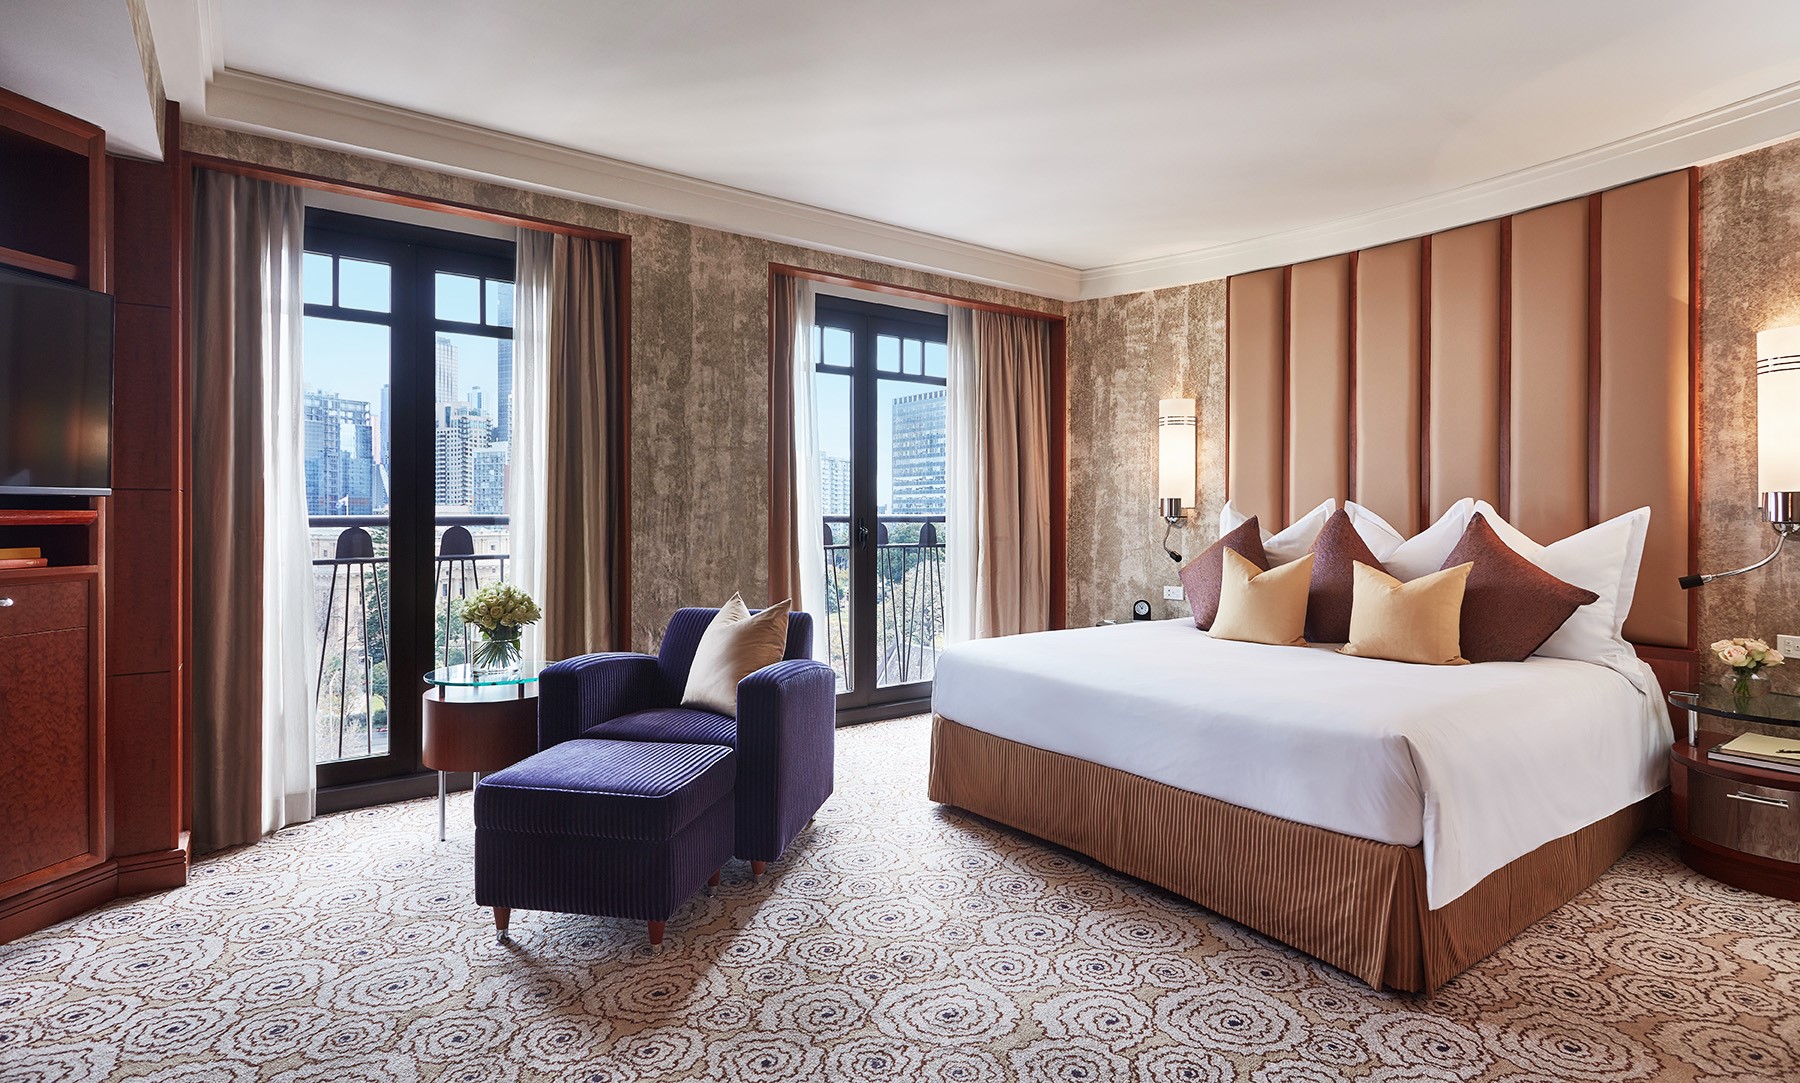 Bedroom in Diplomat Suite at Park Hyatt Melbourne hotel